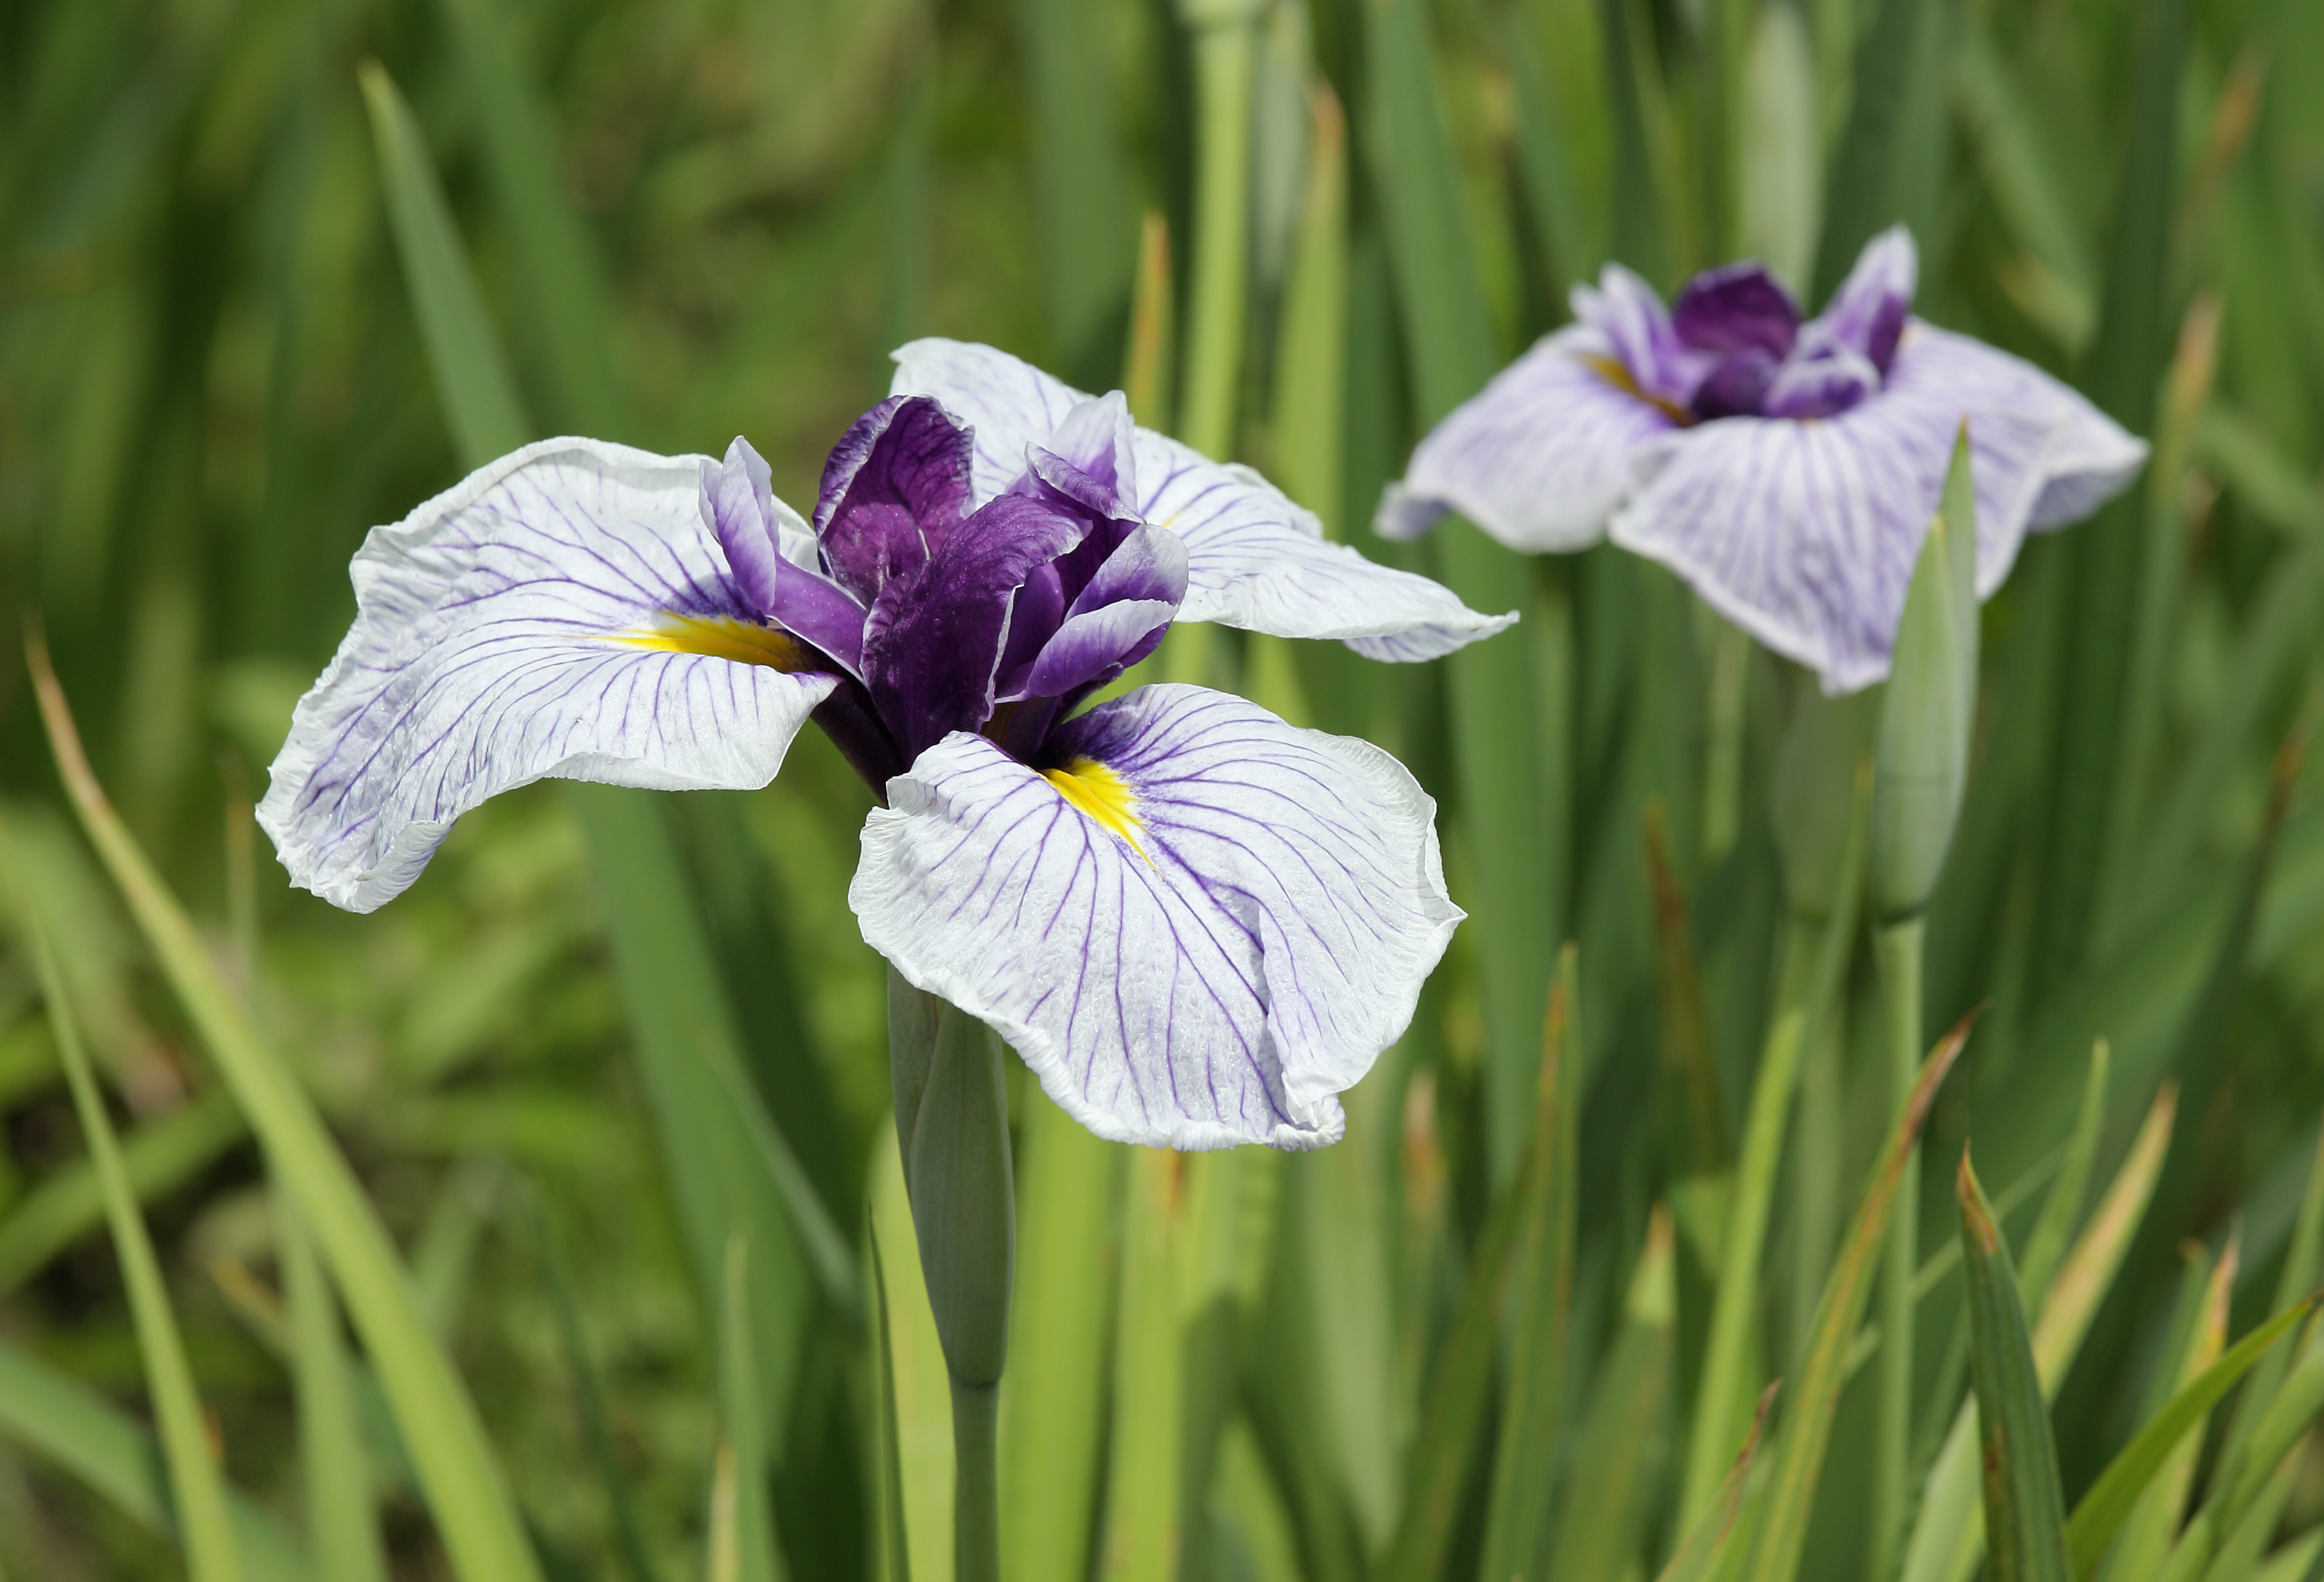 Japanese Iris plants